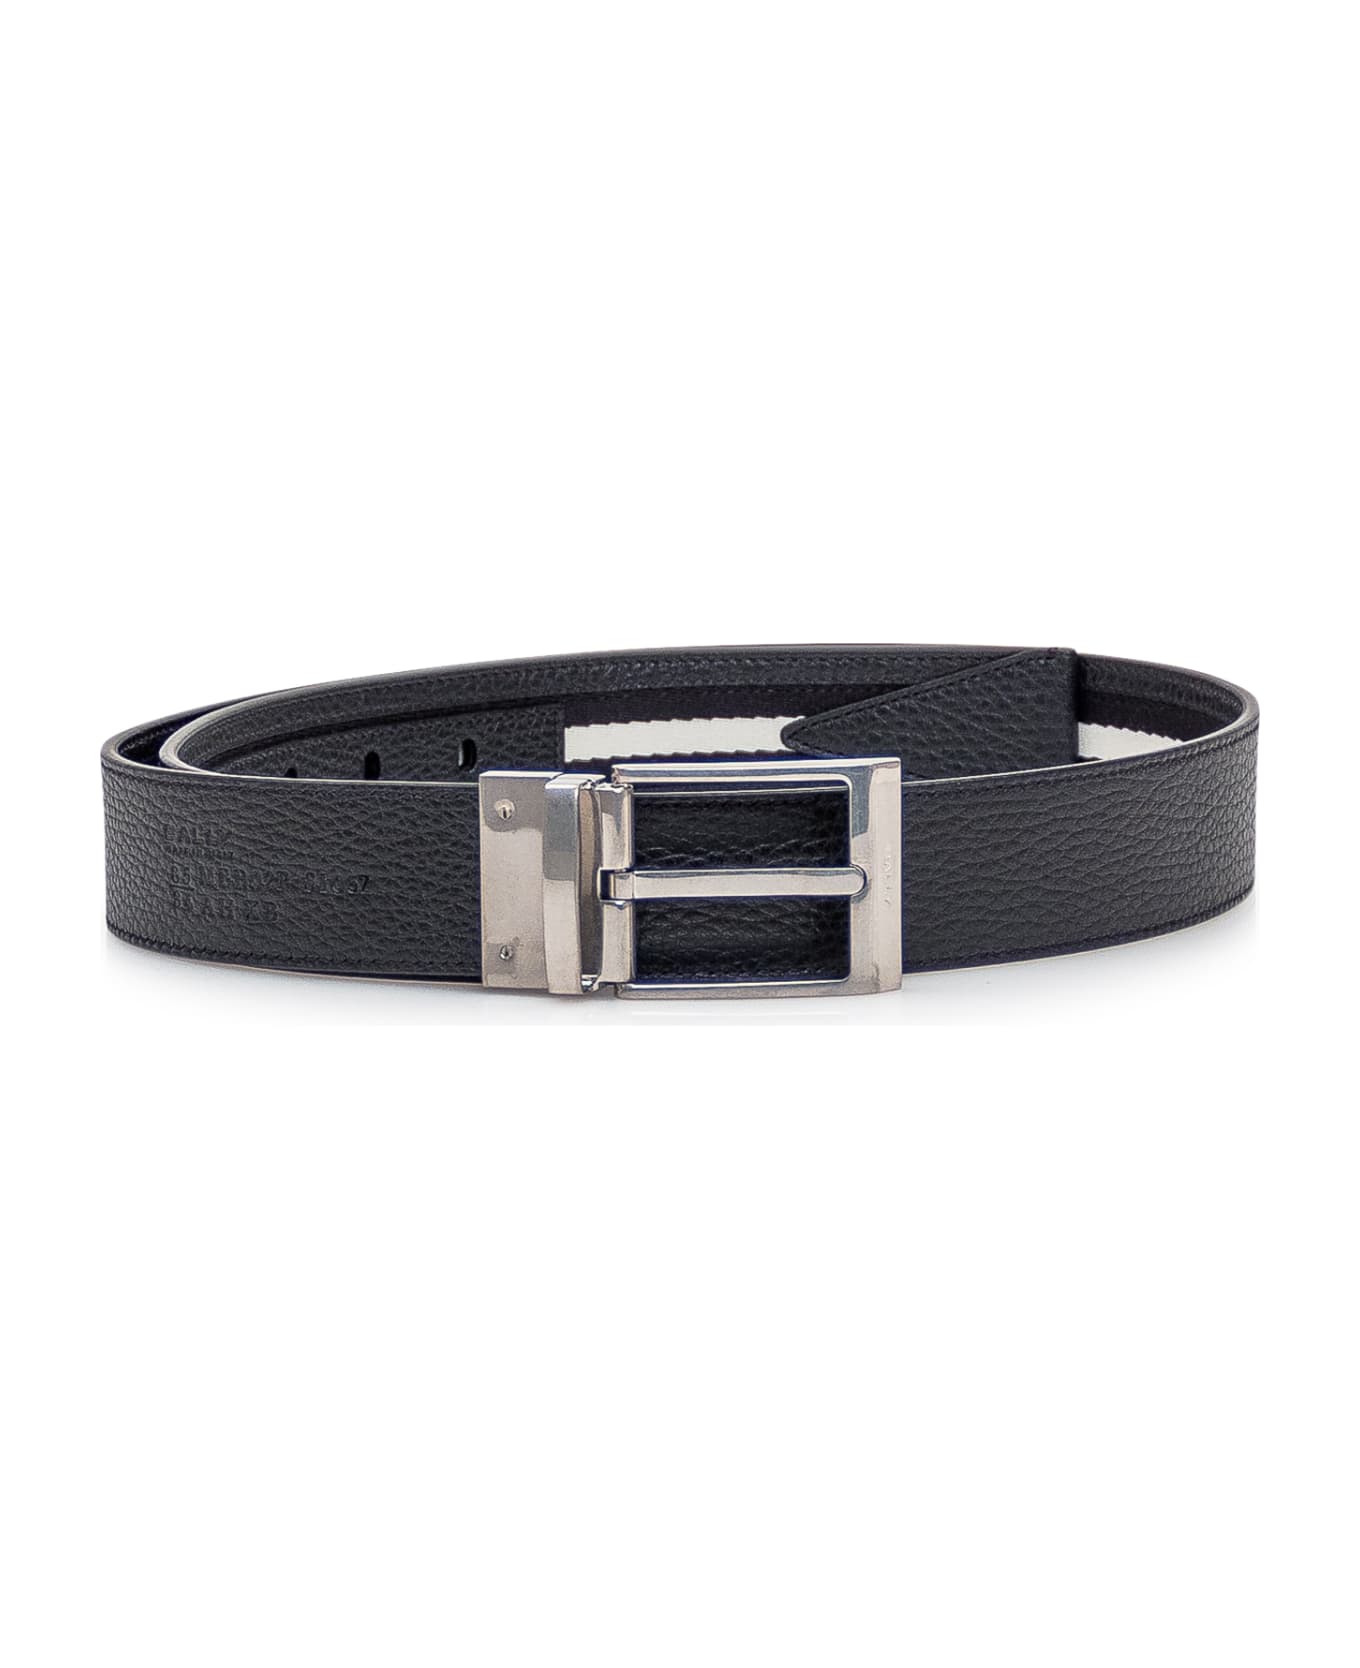 Bally Leather Belt - BLACK+BLK/BONE+PALL ベルト